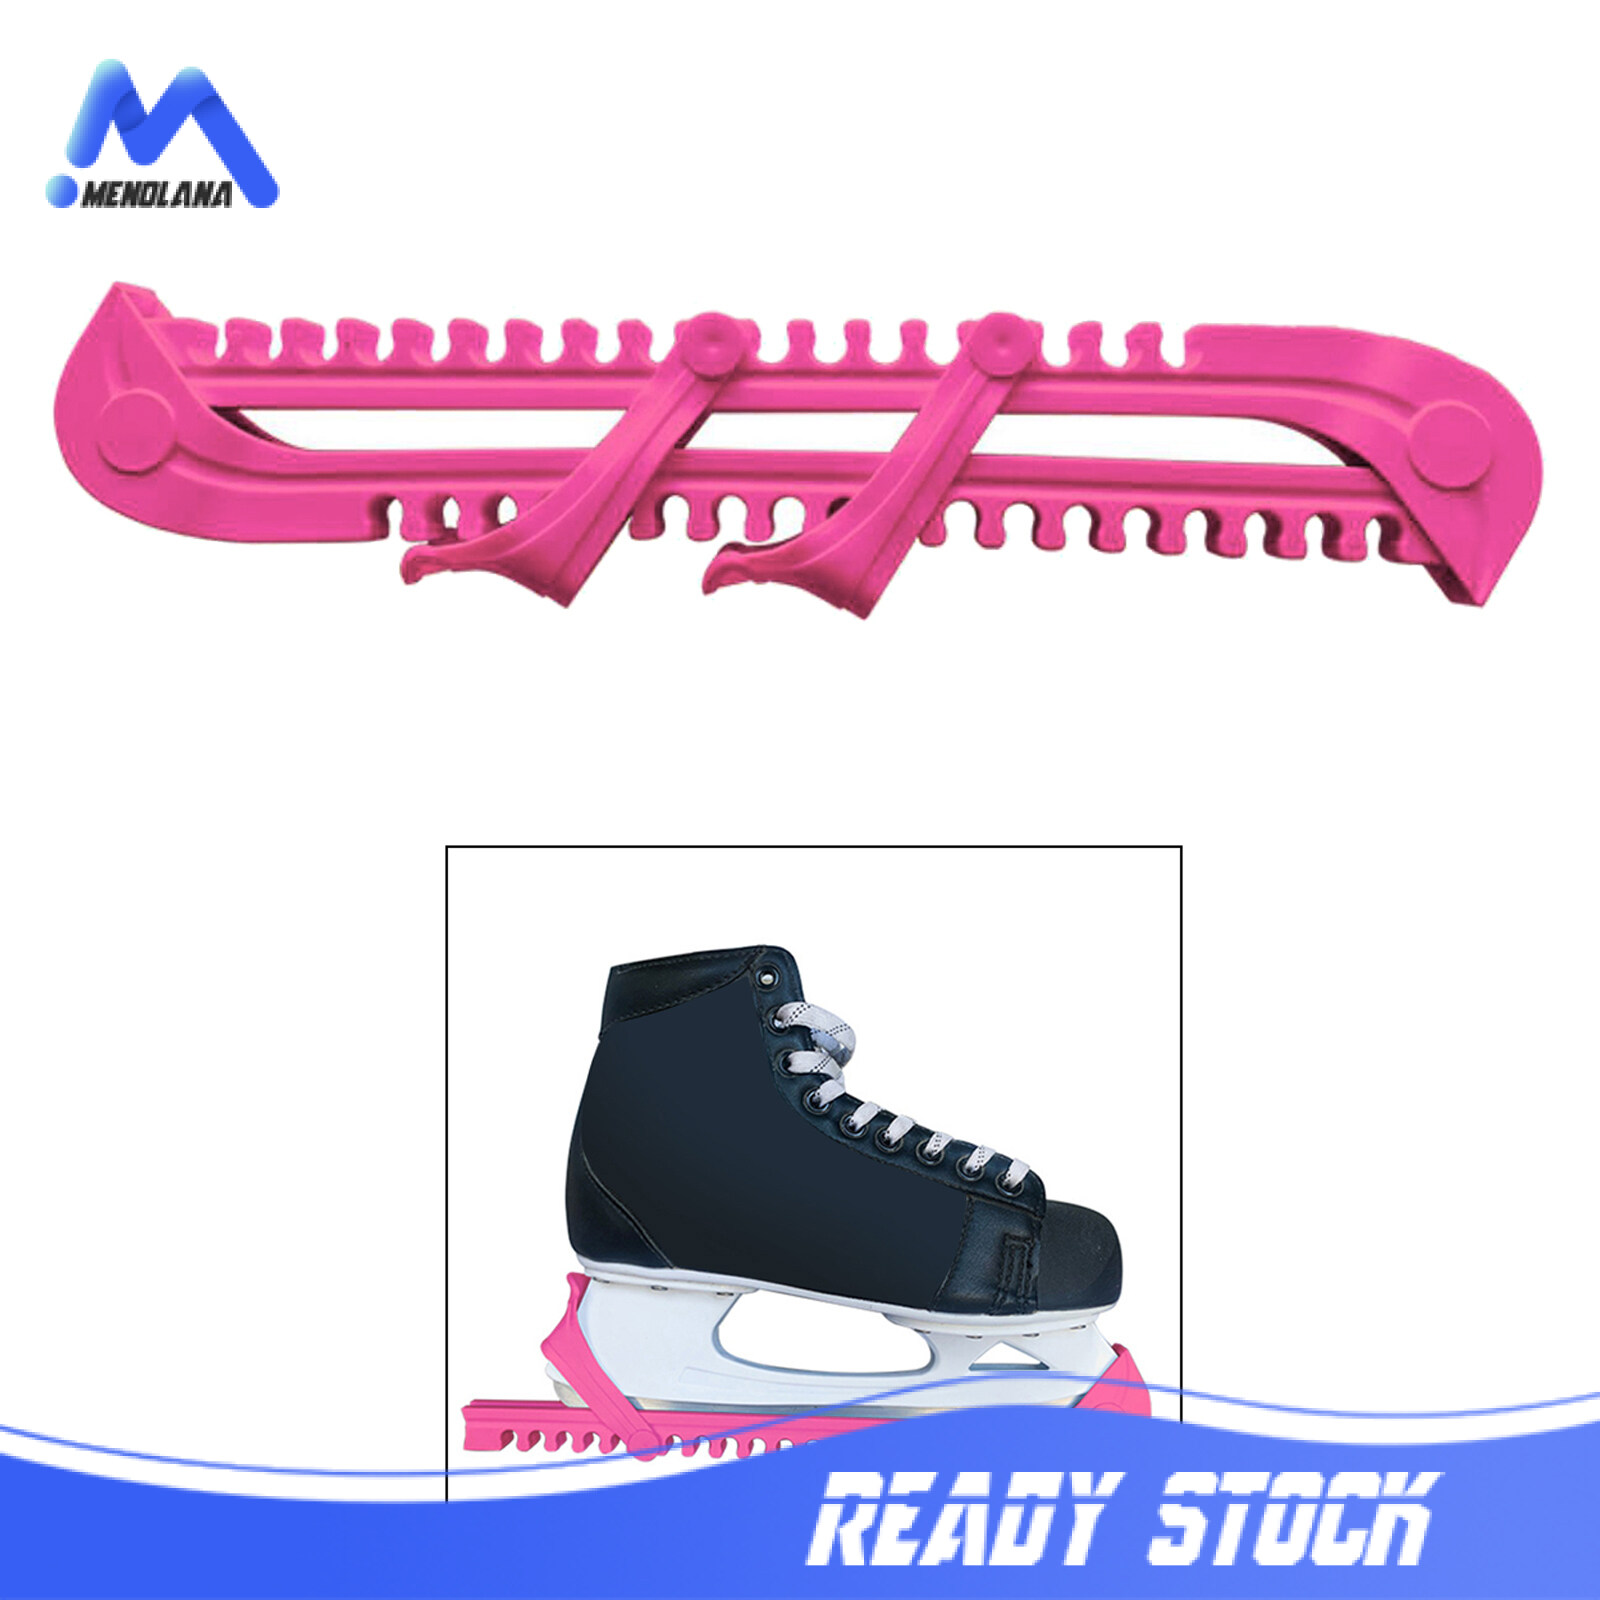 Menolana Universal ใบมีดรองเท้าสเก็ต Guard น้ำแข็งป้องกัน Off Ice กันกระแทก